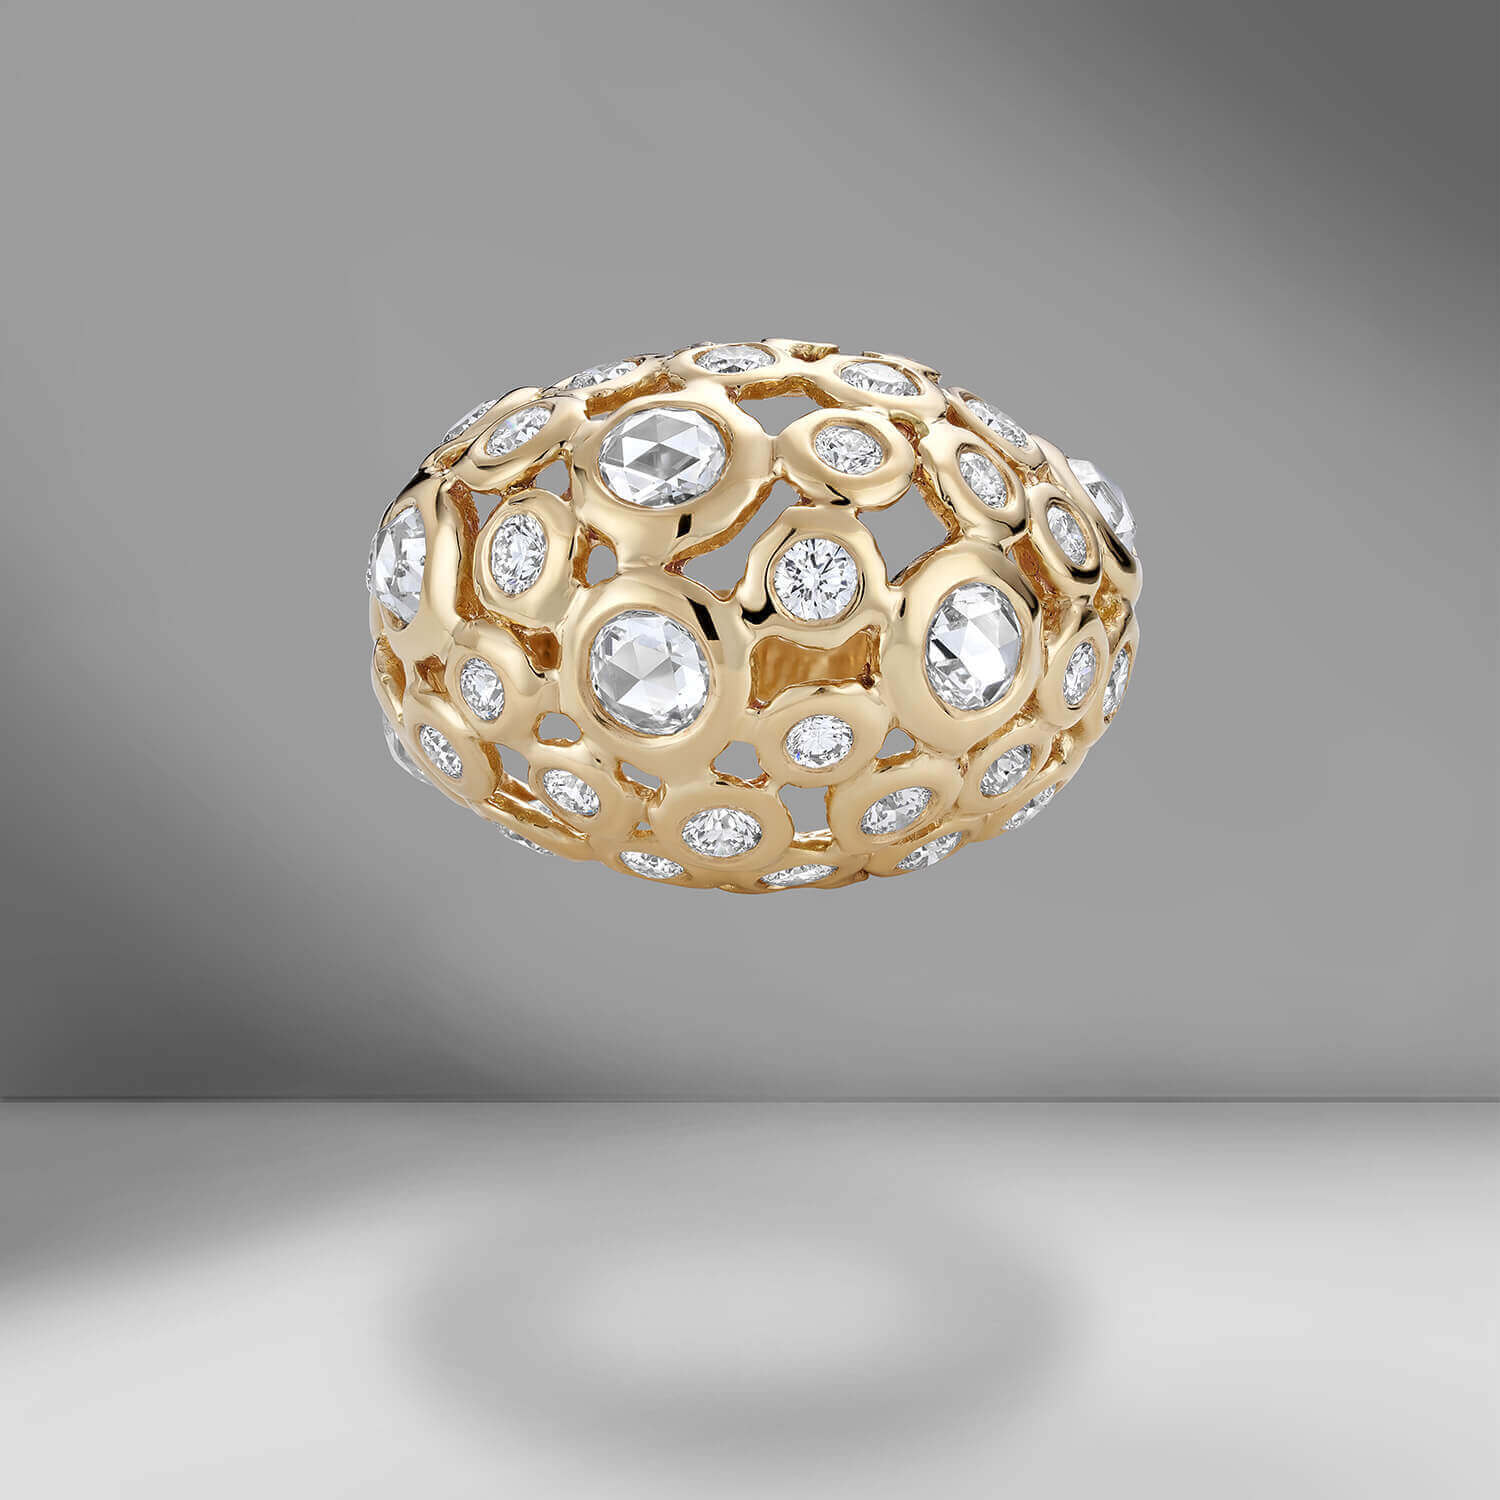 Montreal diamond ring jewels-2 